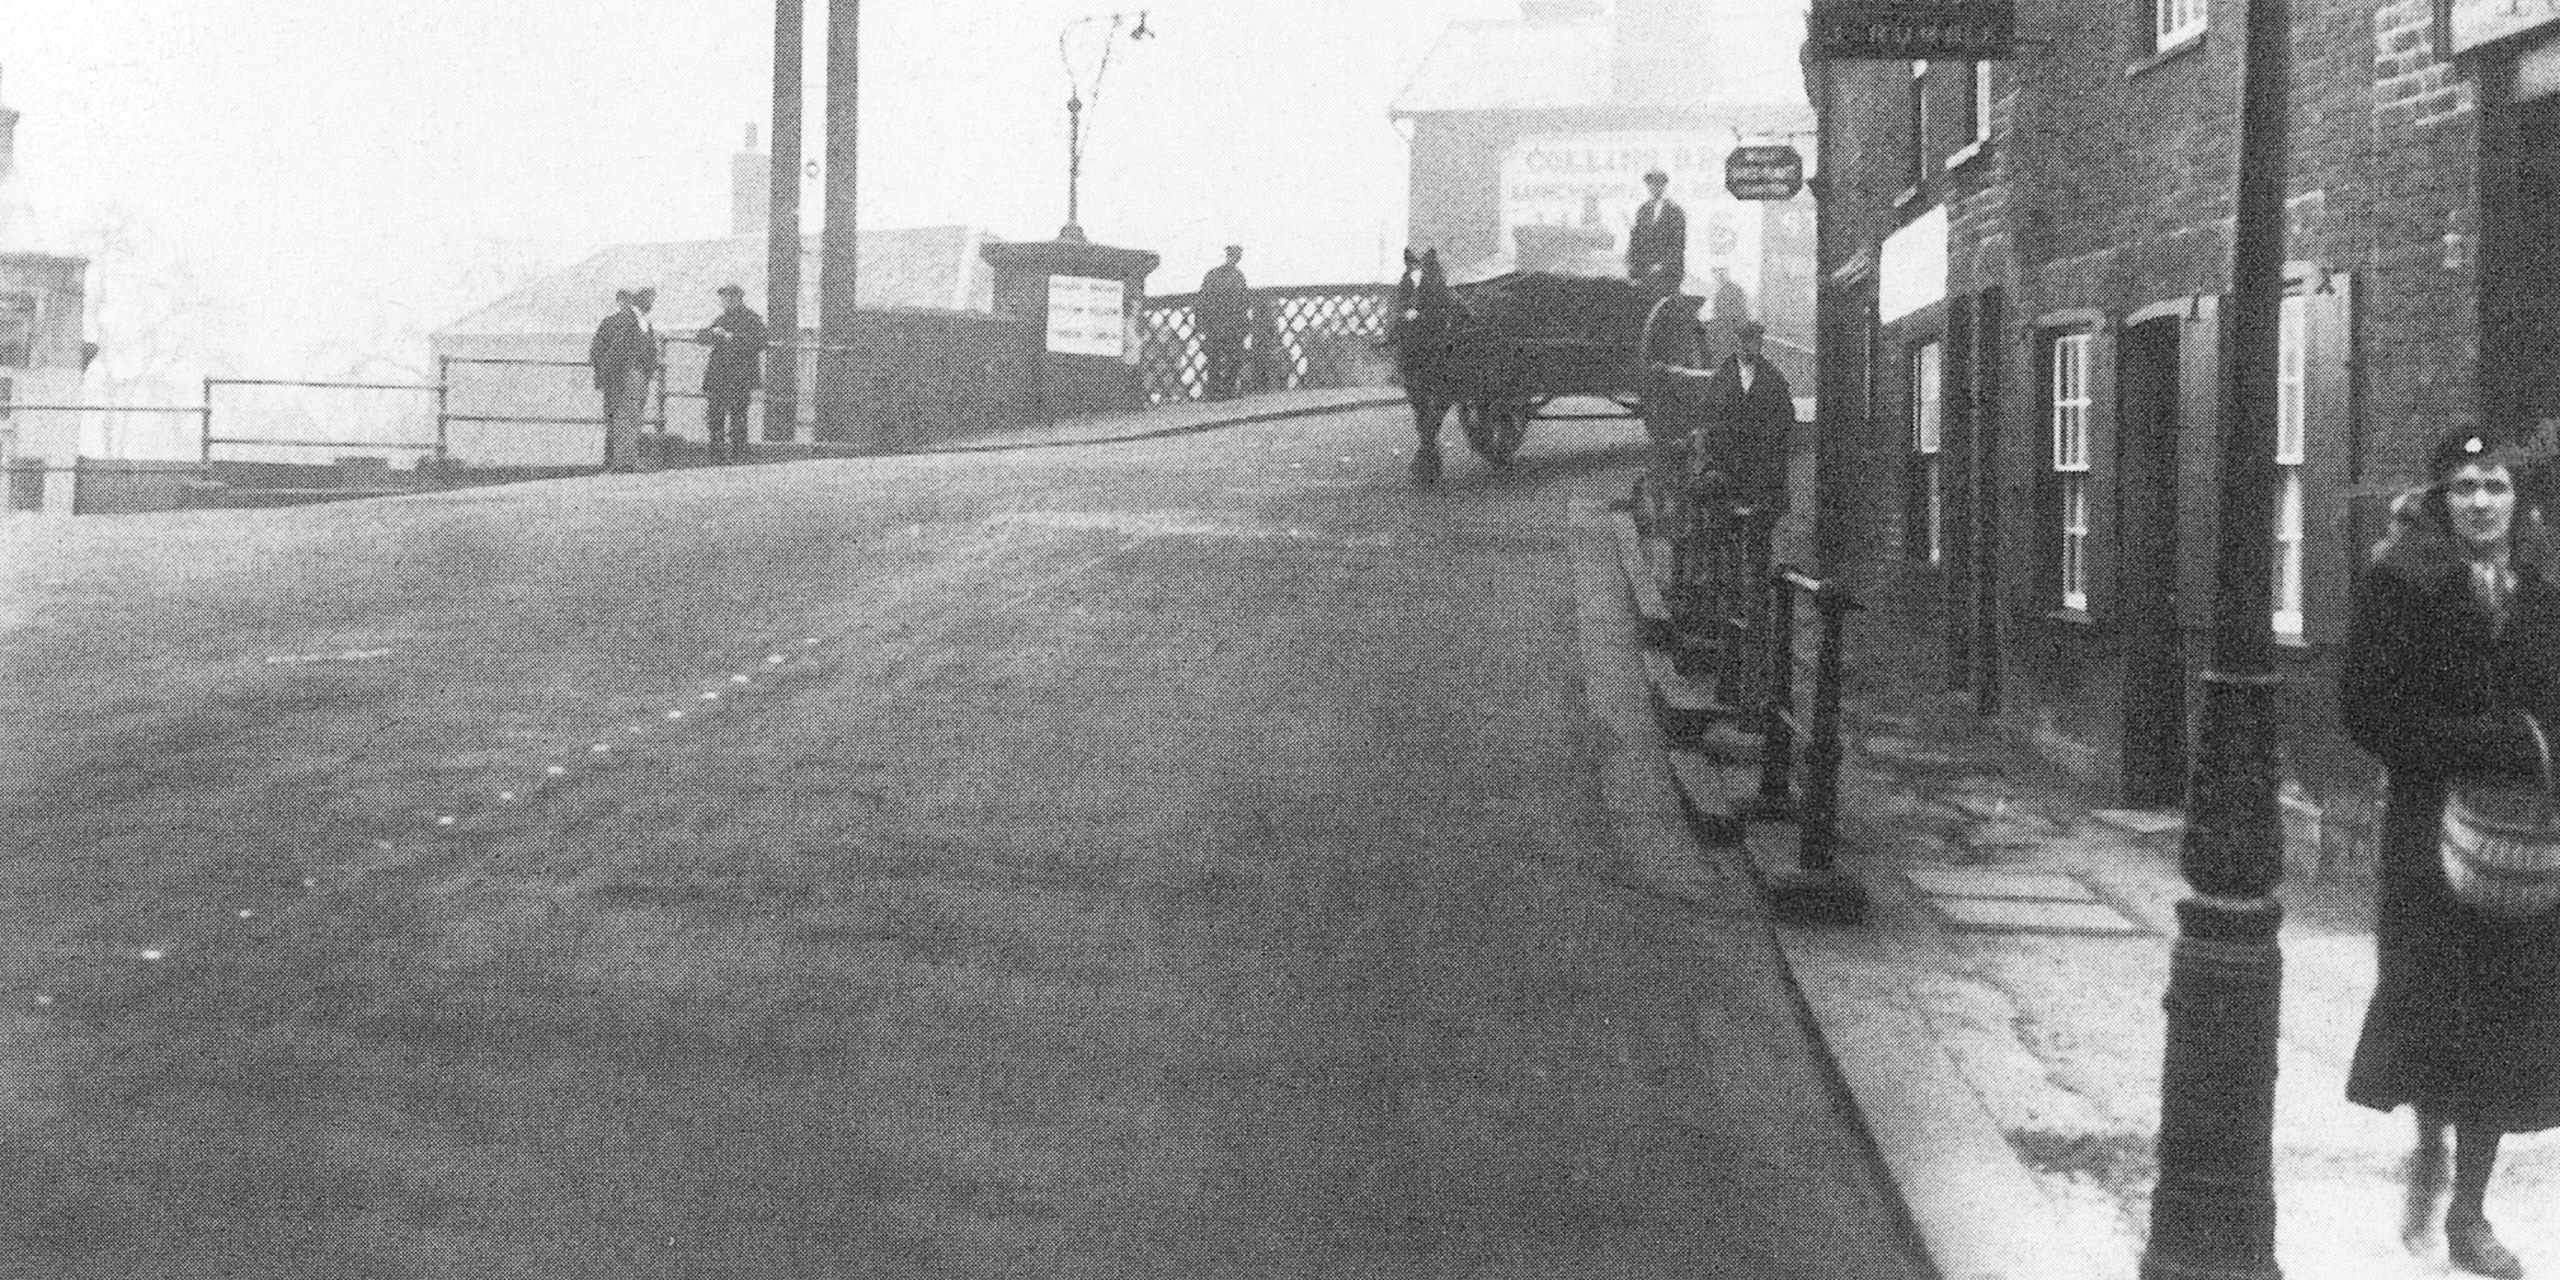 Now & Then - Colham Bridge, Yiewsley - 2019 vs 1933